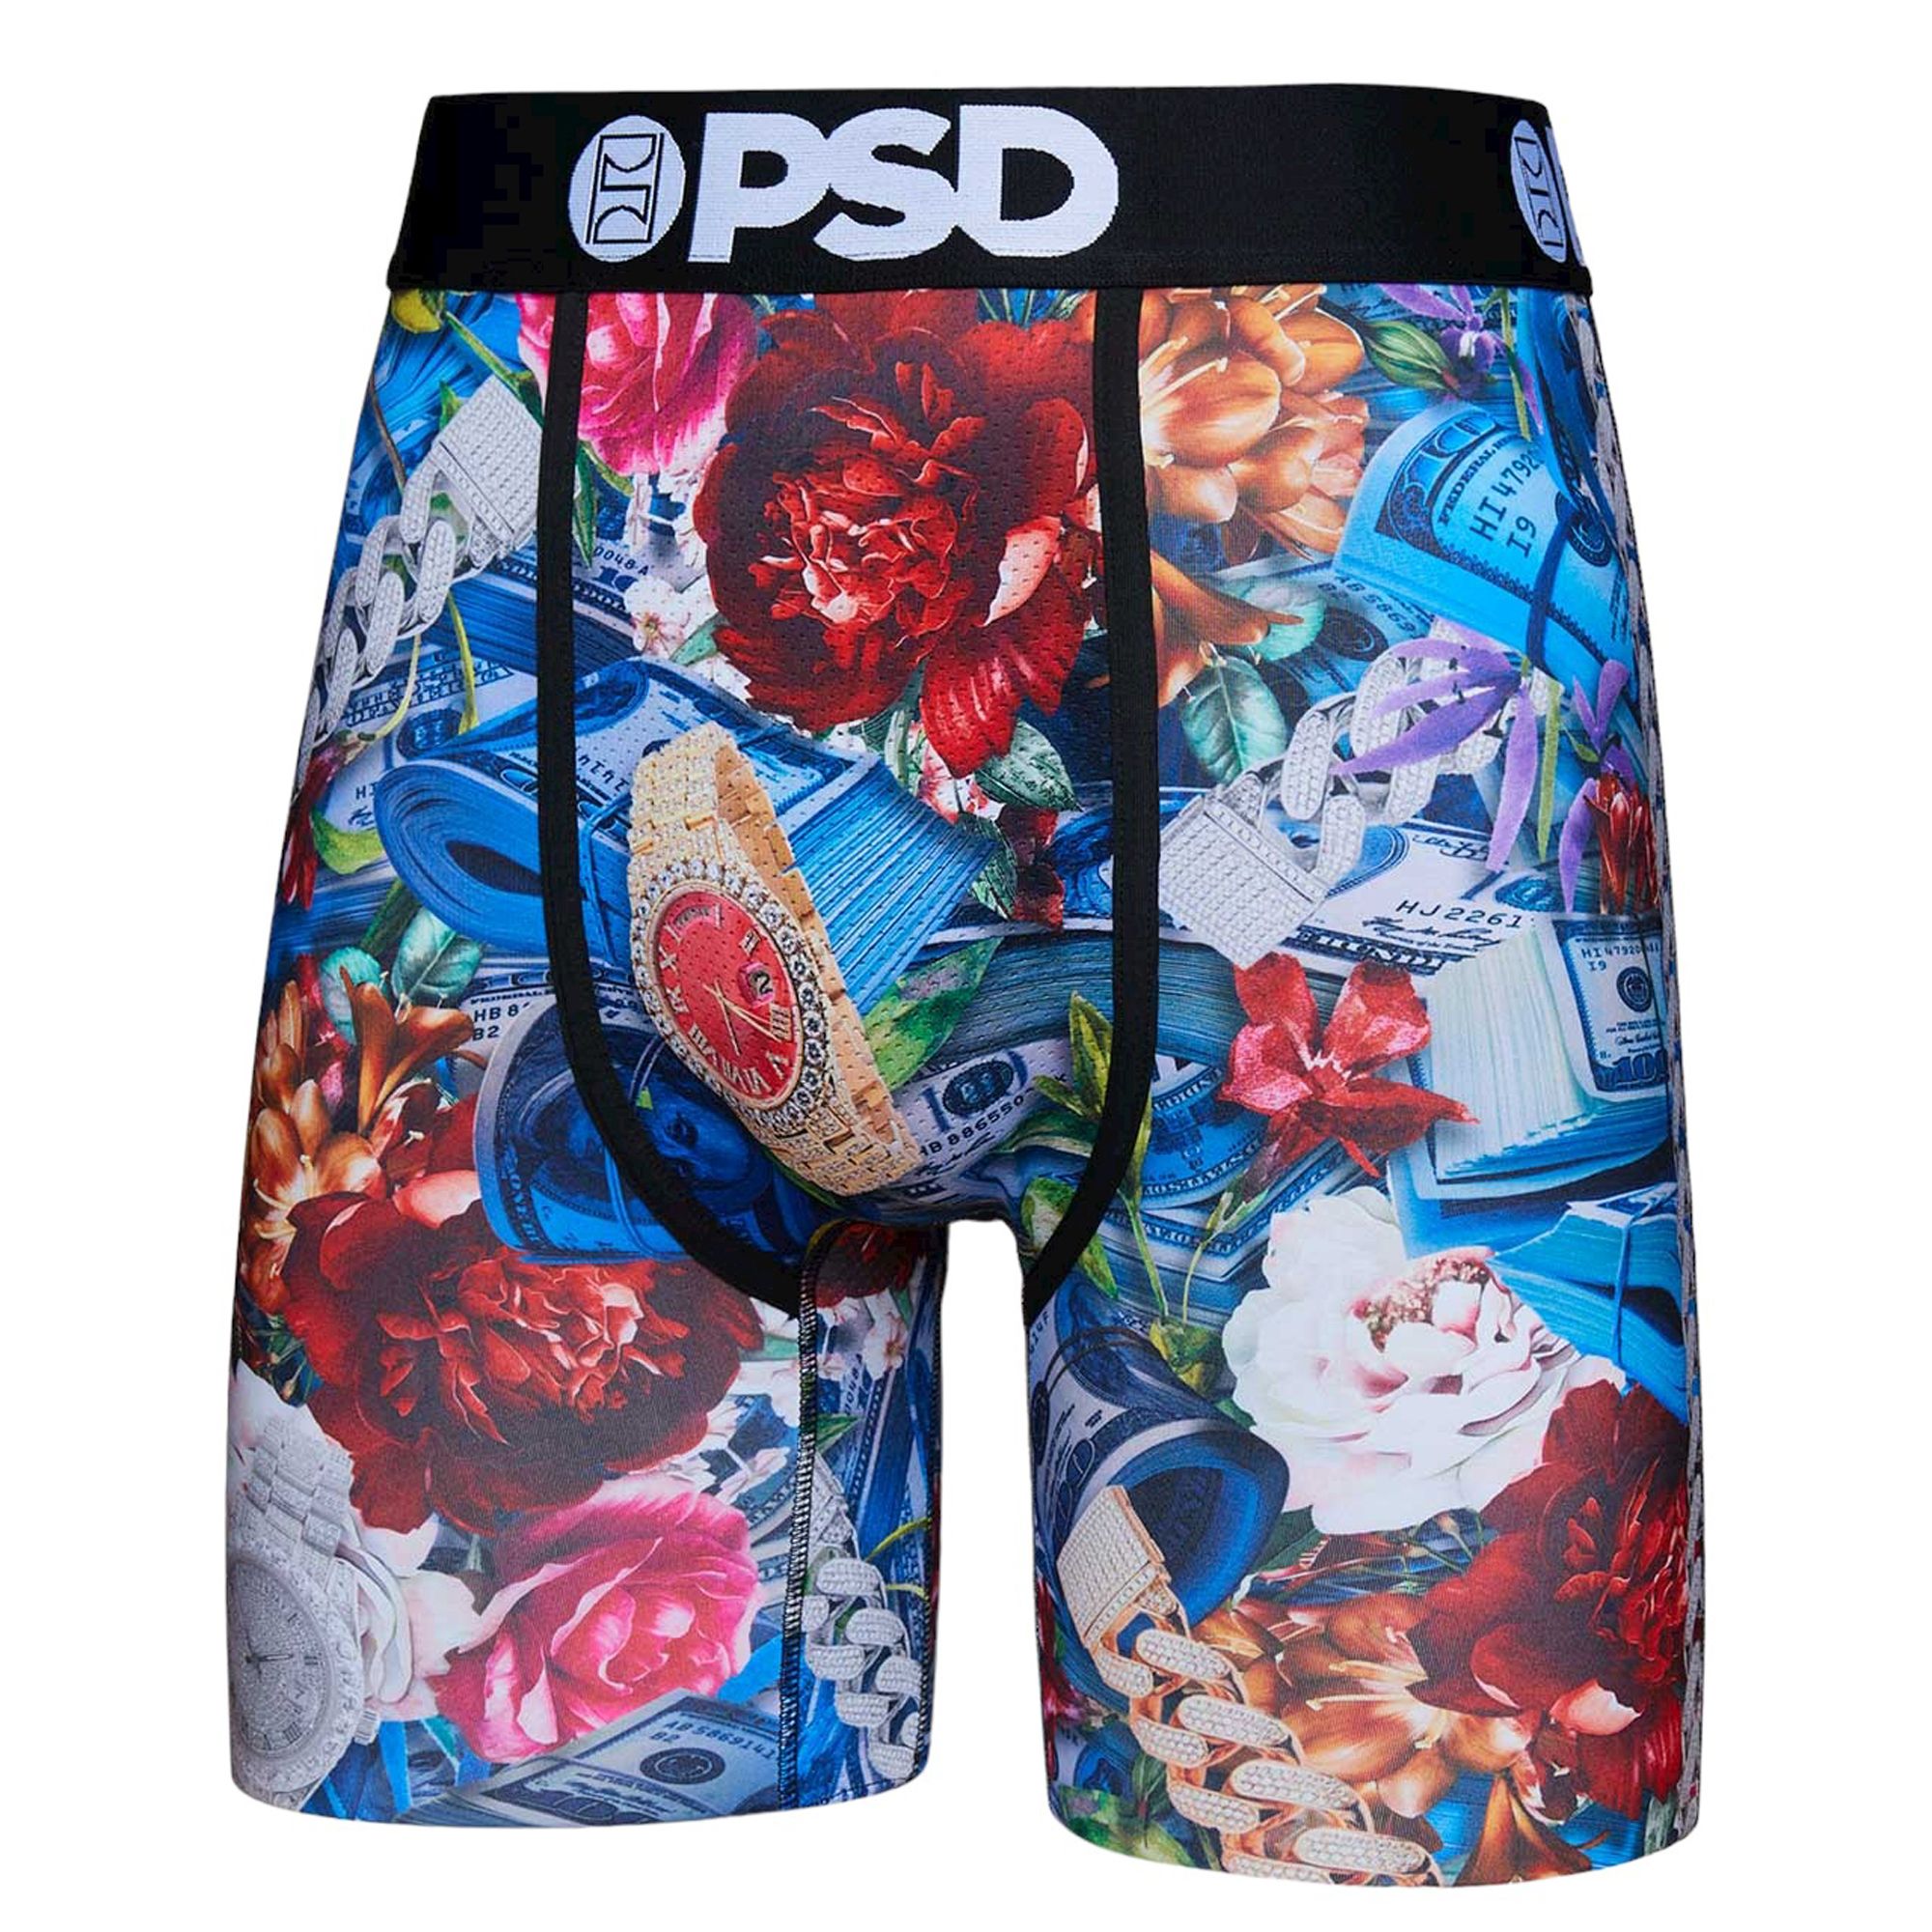 PSD Bandana Roses Sports Bra Women's Top Underwear (Brand New)